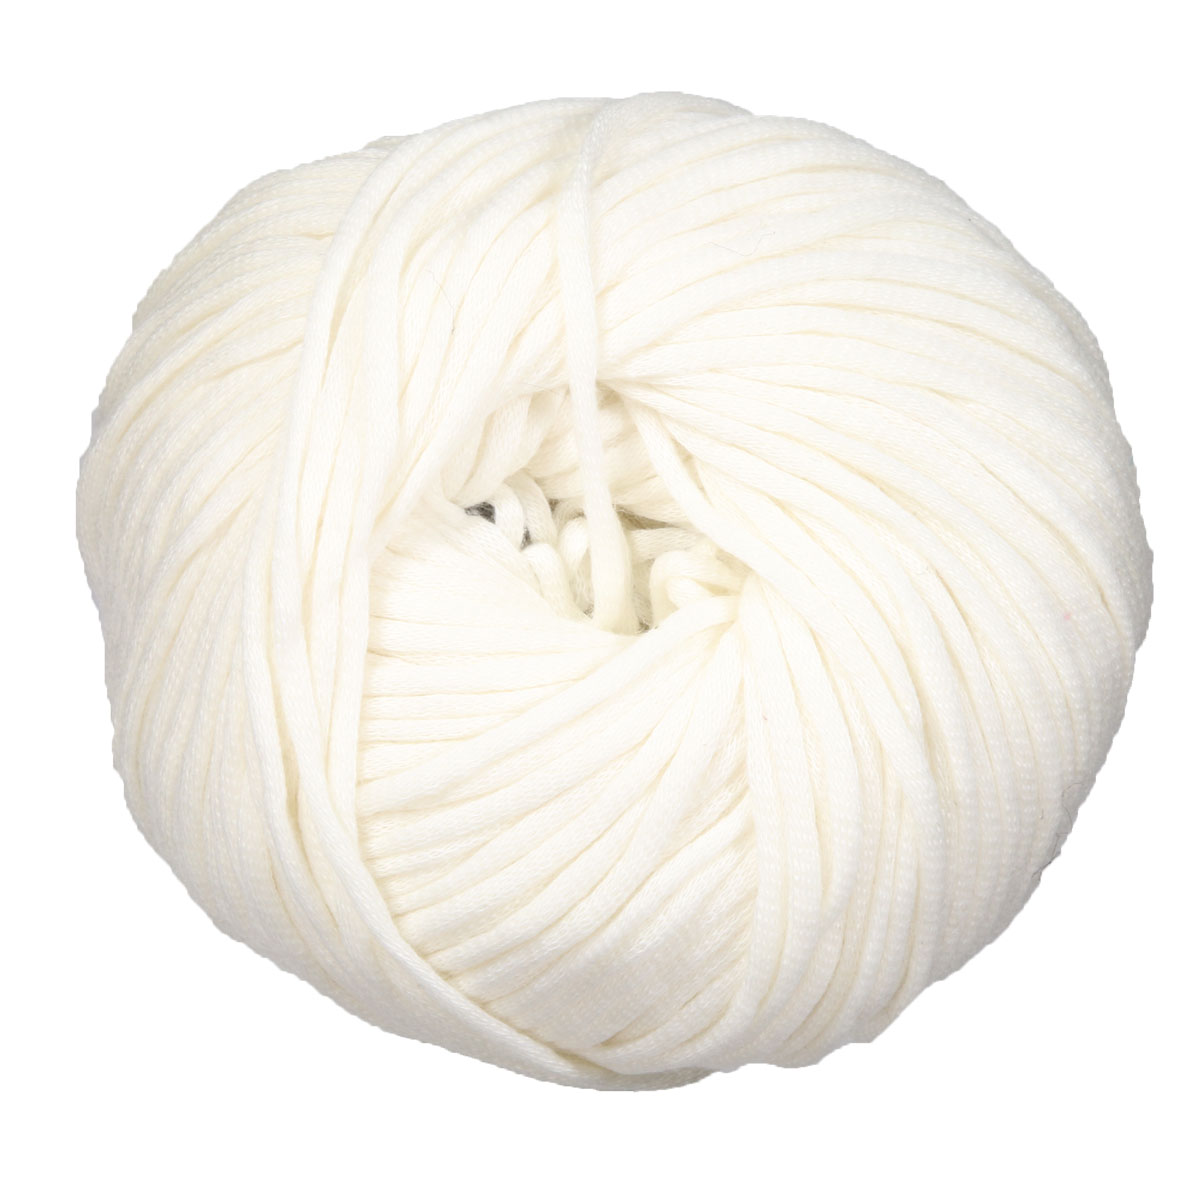 Rowan Selects Mako Cotton Yarn Project Ideas at Jimmy Beans Wool